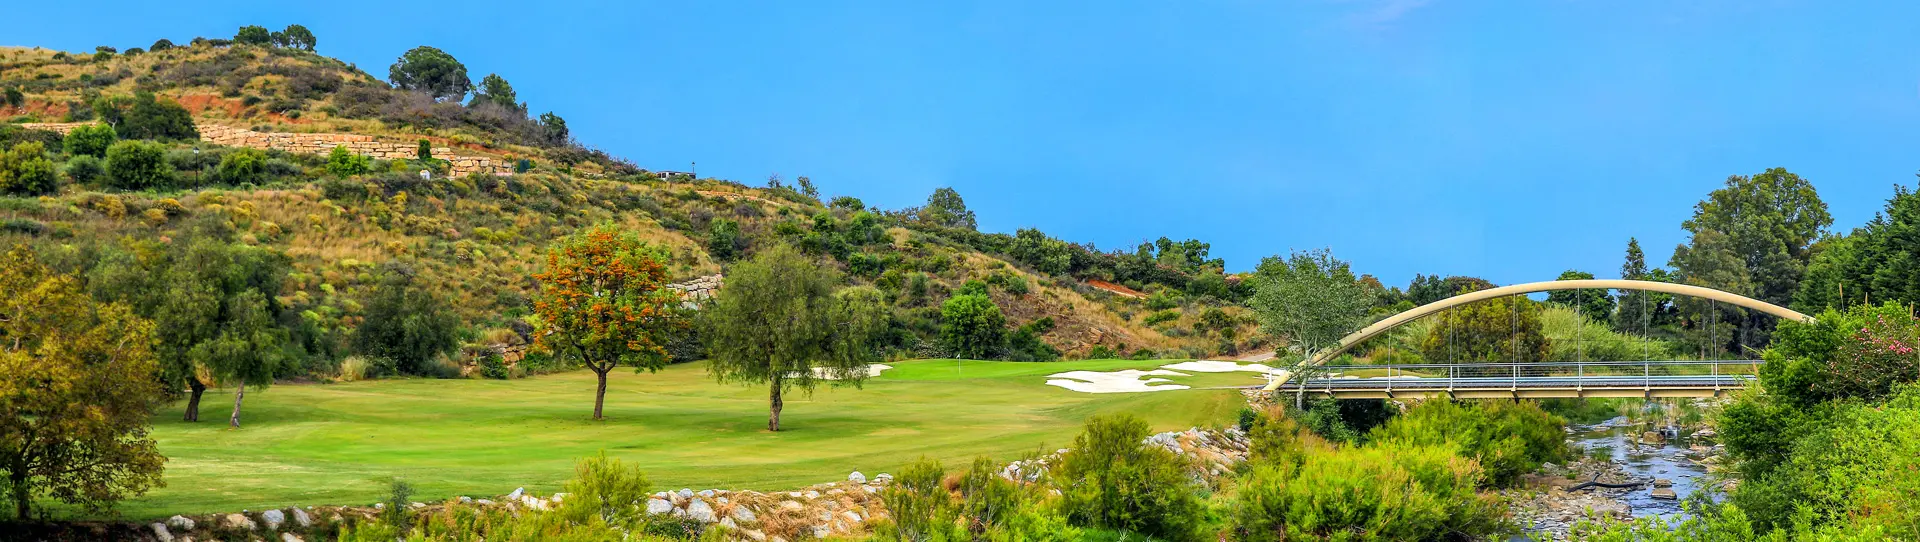 Spain golf courses - La Cala Europa - Photo 1